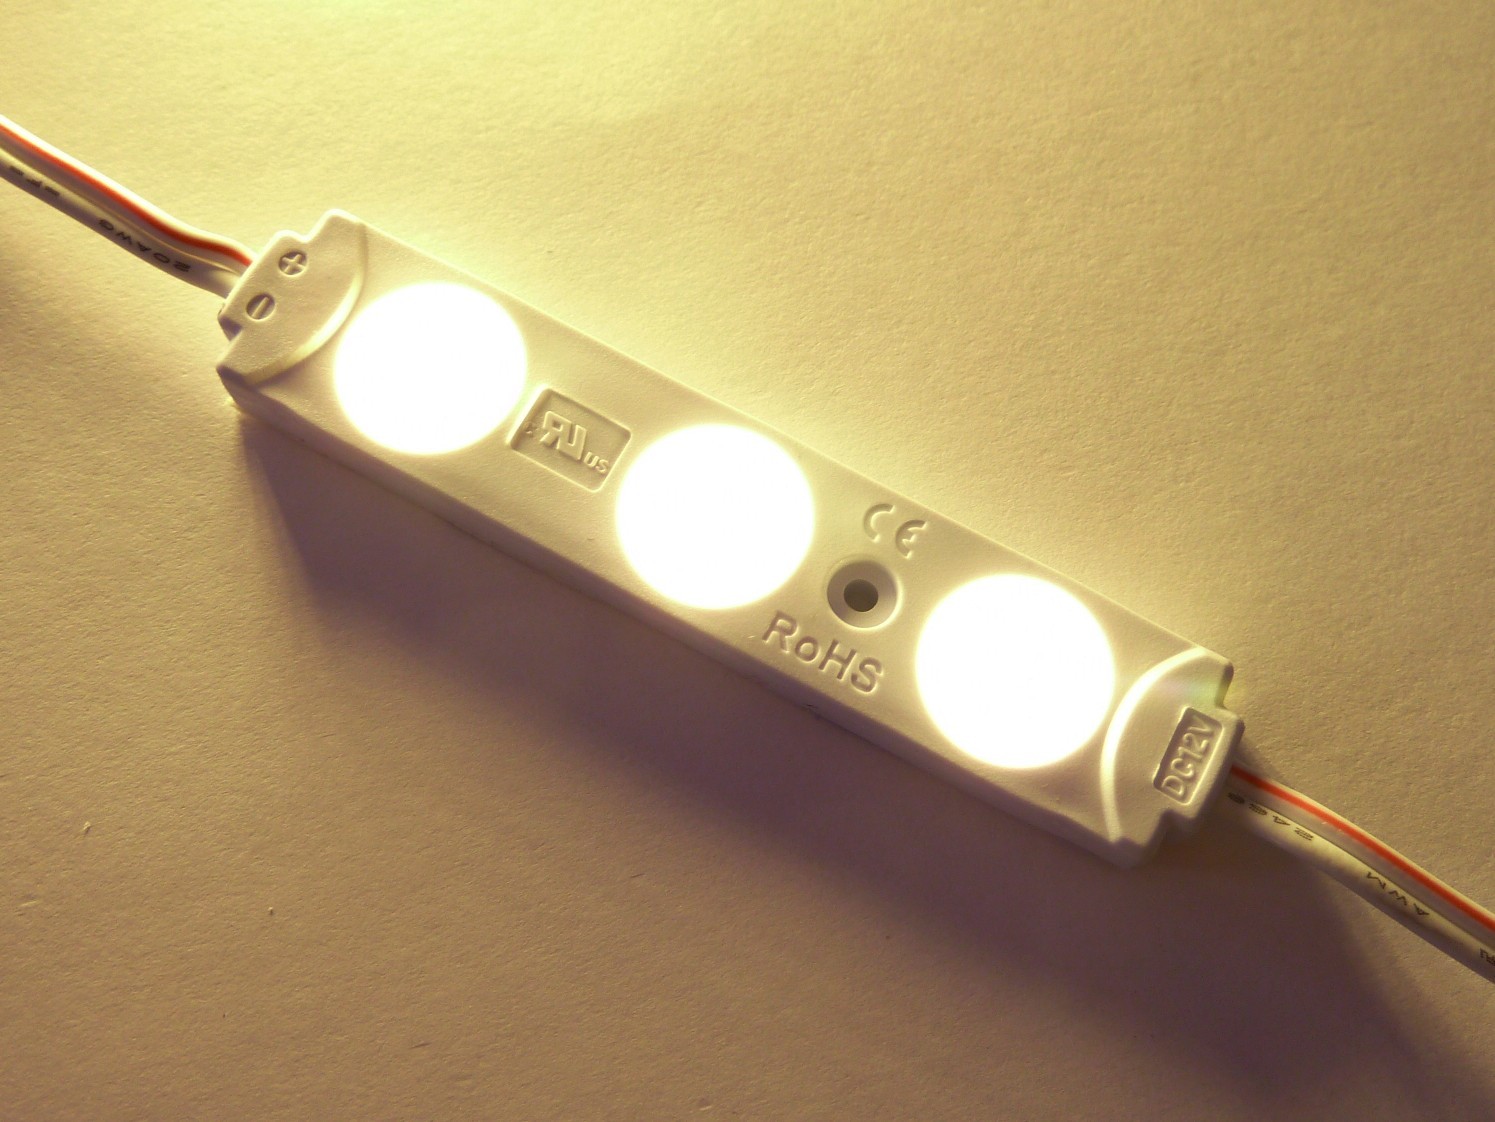 LED modul 0,72W 743-160-12V Teplá bílá